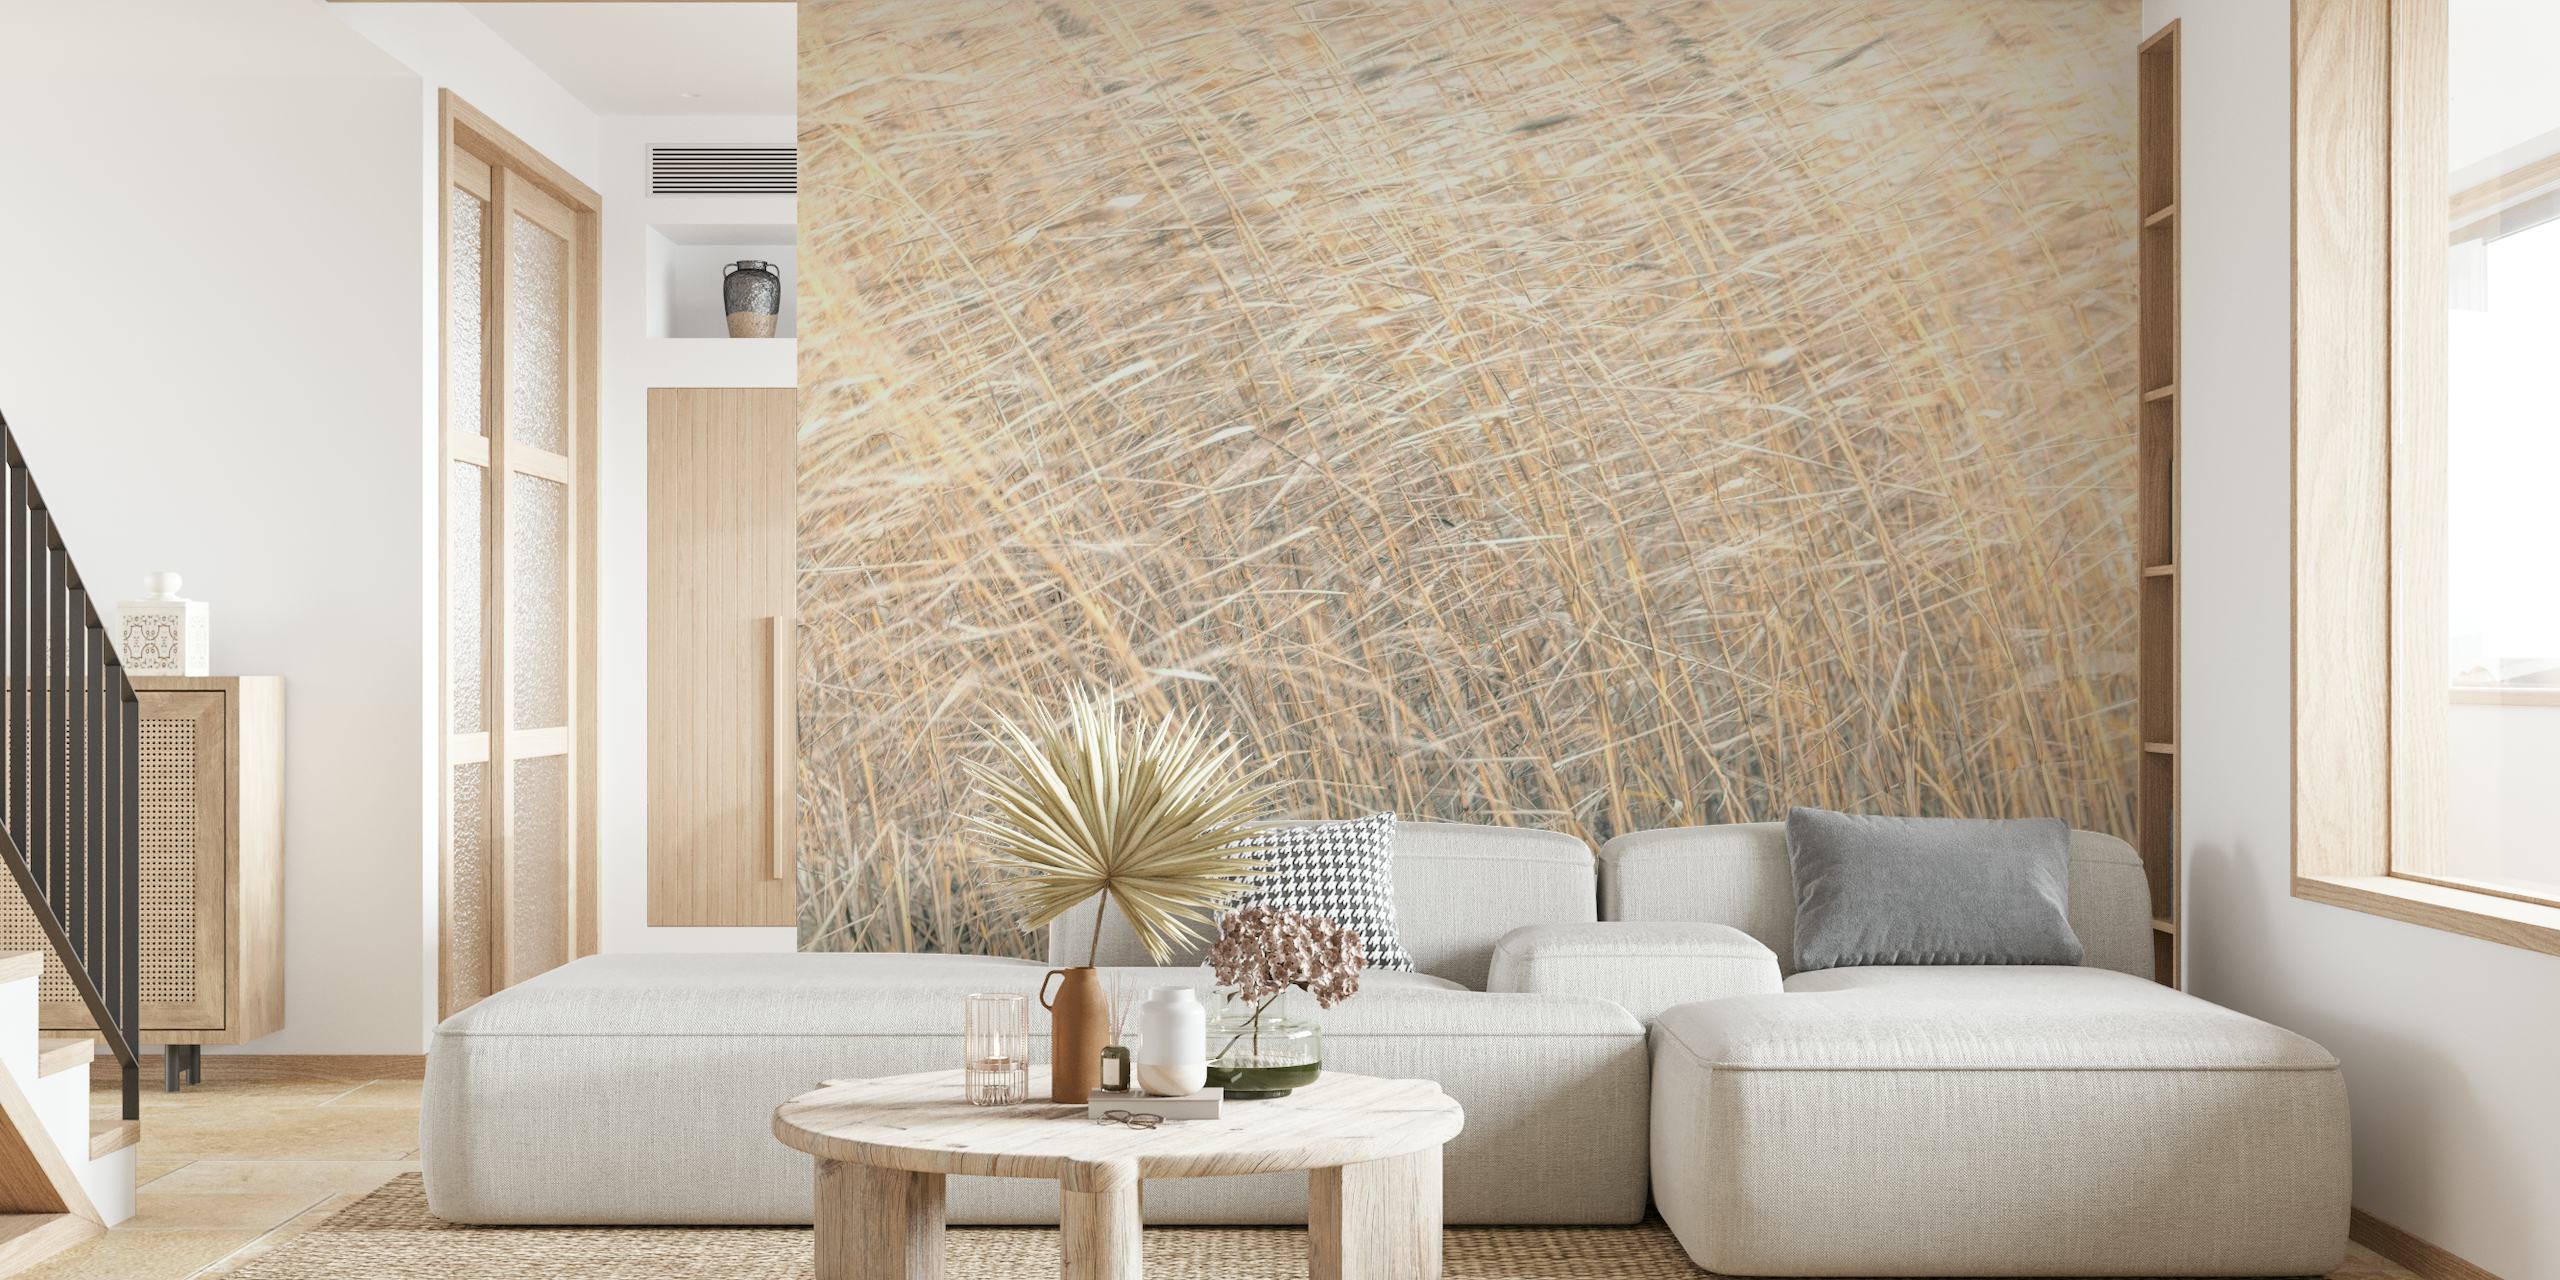 Brown reeds growing in water wallpaper